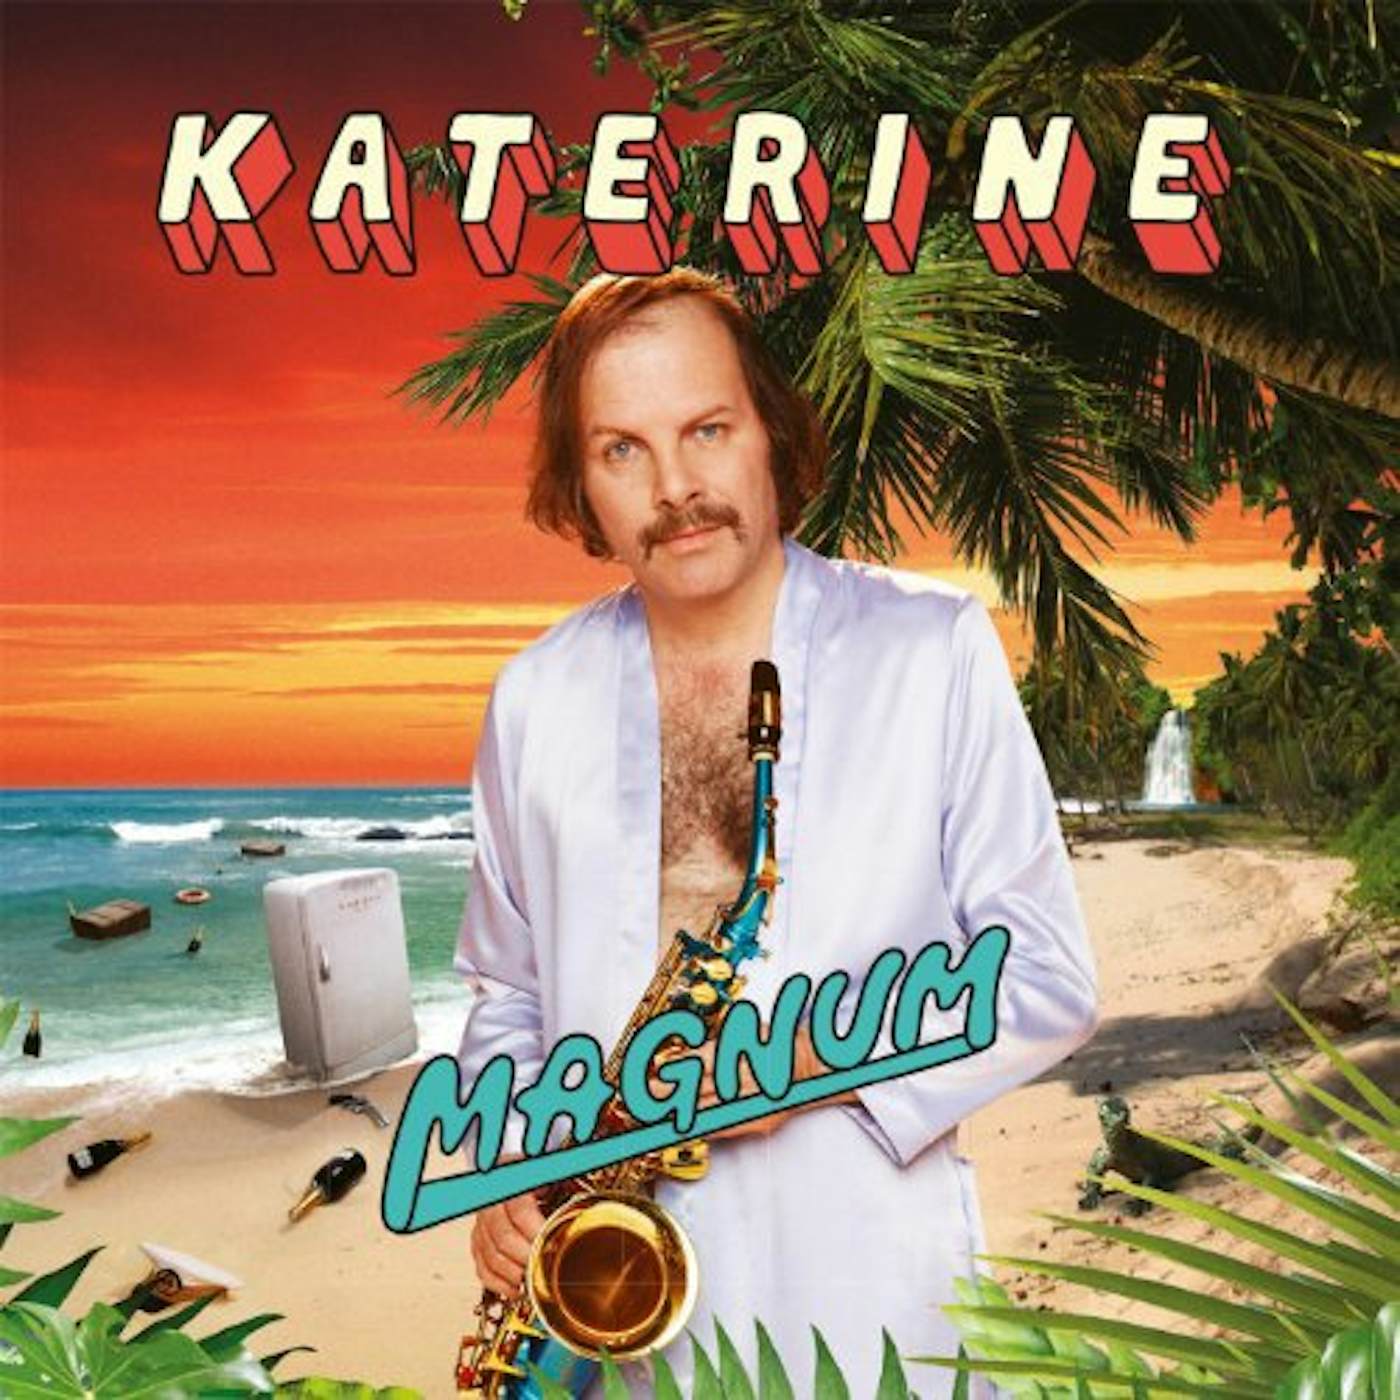 Philippe Katerine MAGNUM Vinyl Record - Limited Edition